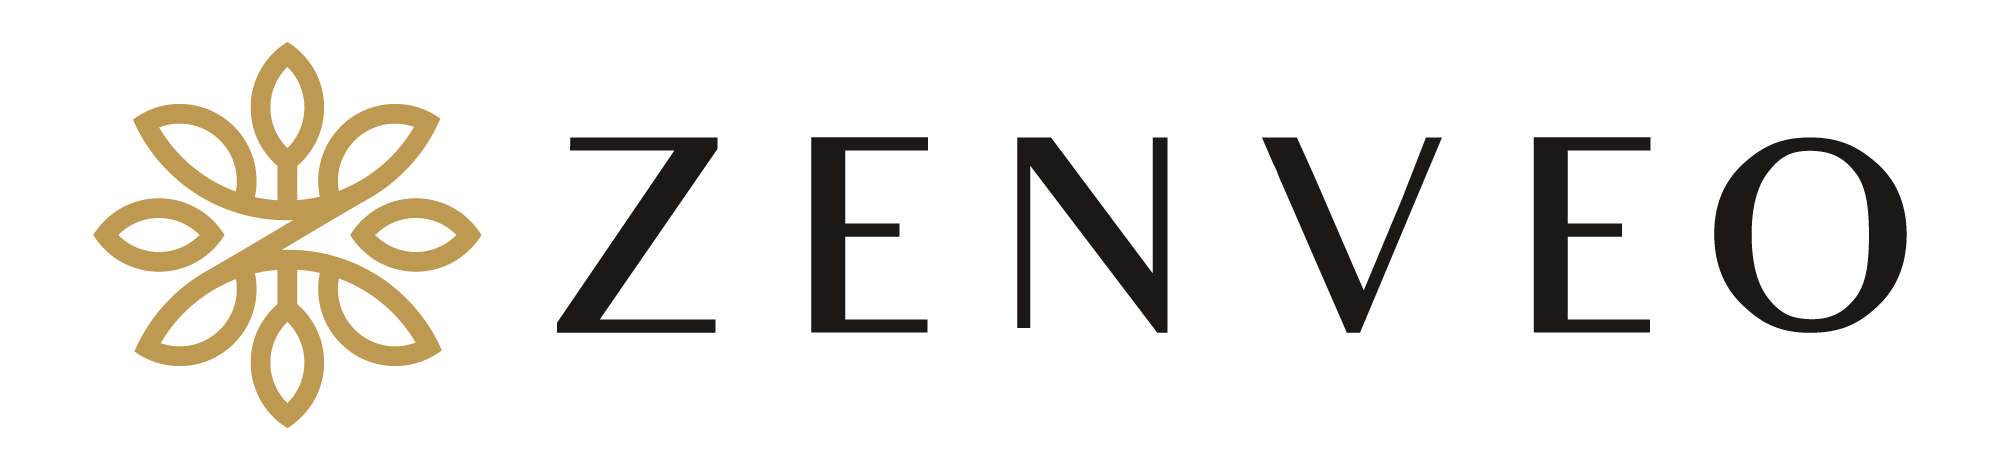 zenveo logo